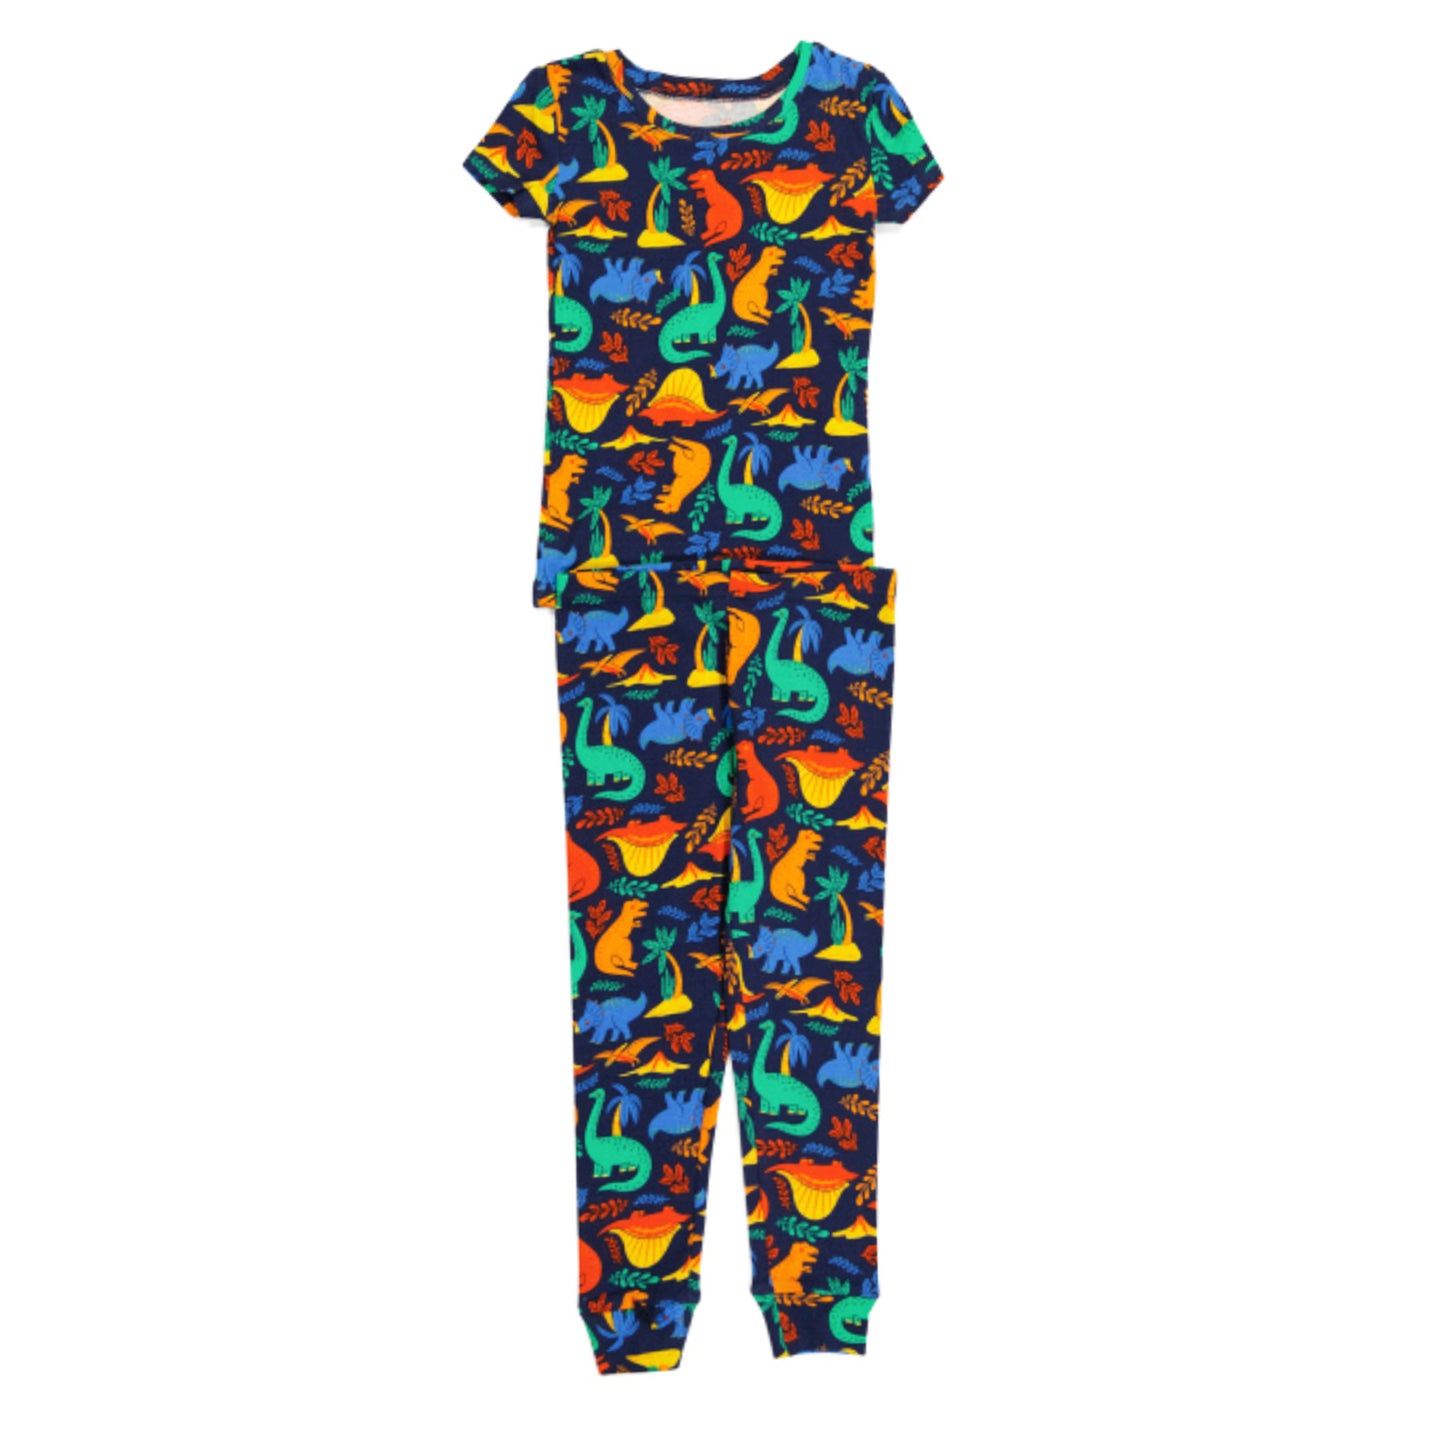 Tommy Bahama Little Boy's 2-Pc Sleepwear Dinosaur Print Soft Cotton Pajama Set